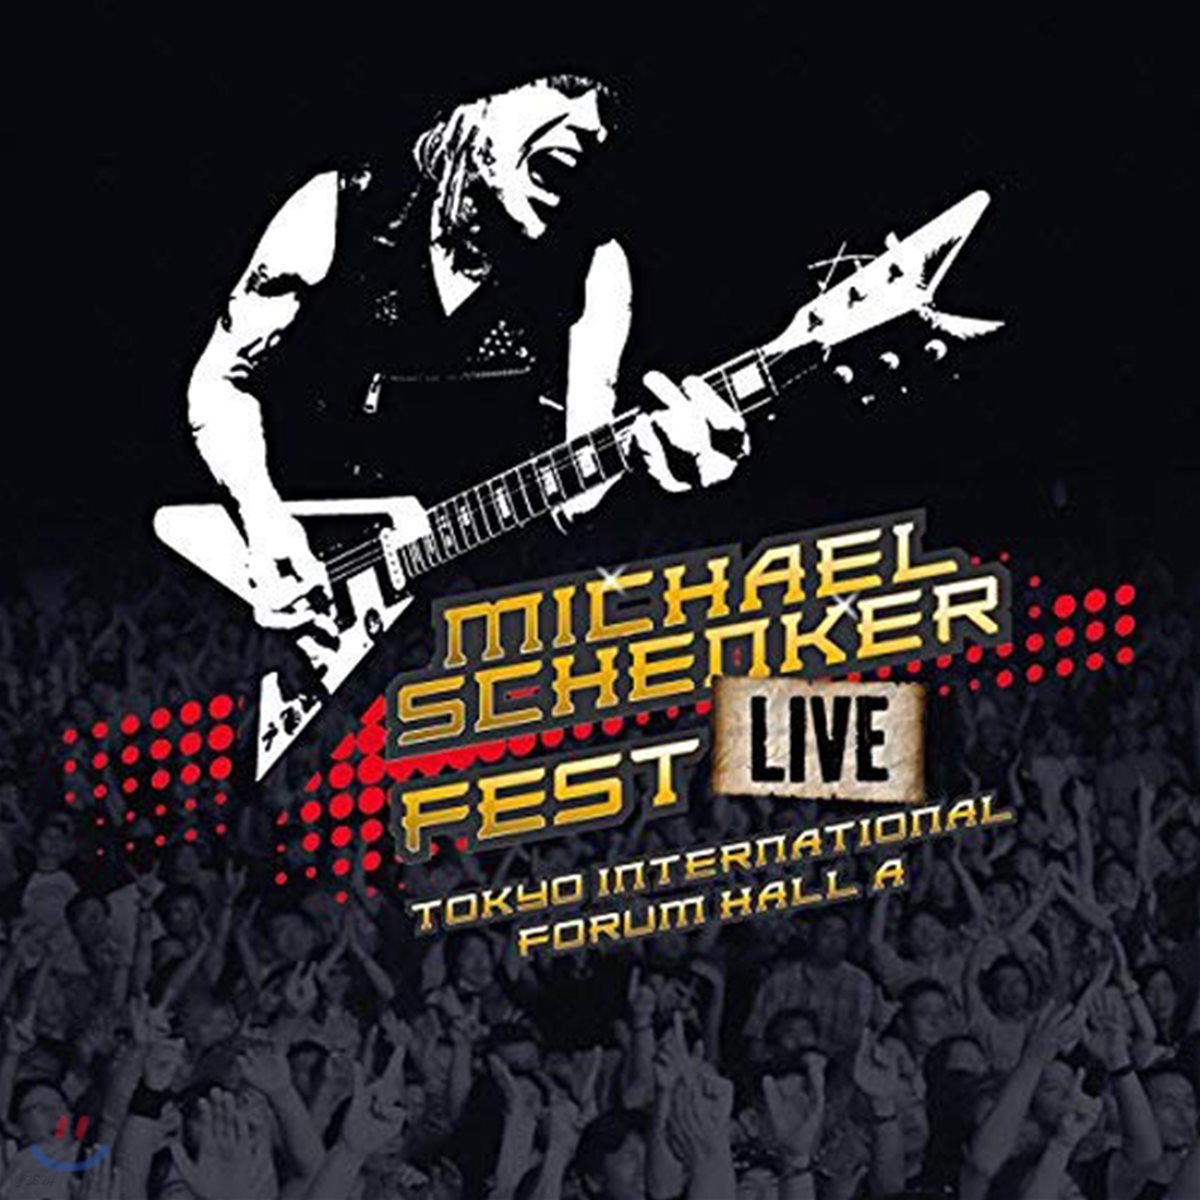 Michael Schenker (마이클 쉥커) - Fest - Live Tokyo International Forum Hall A (Deuxe Edition)